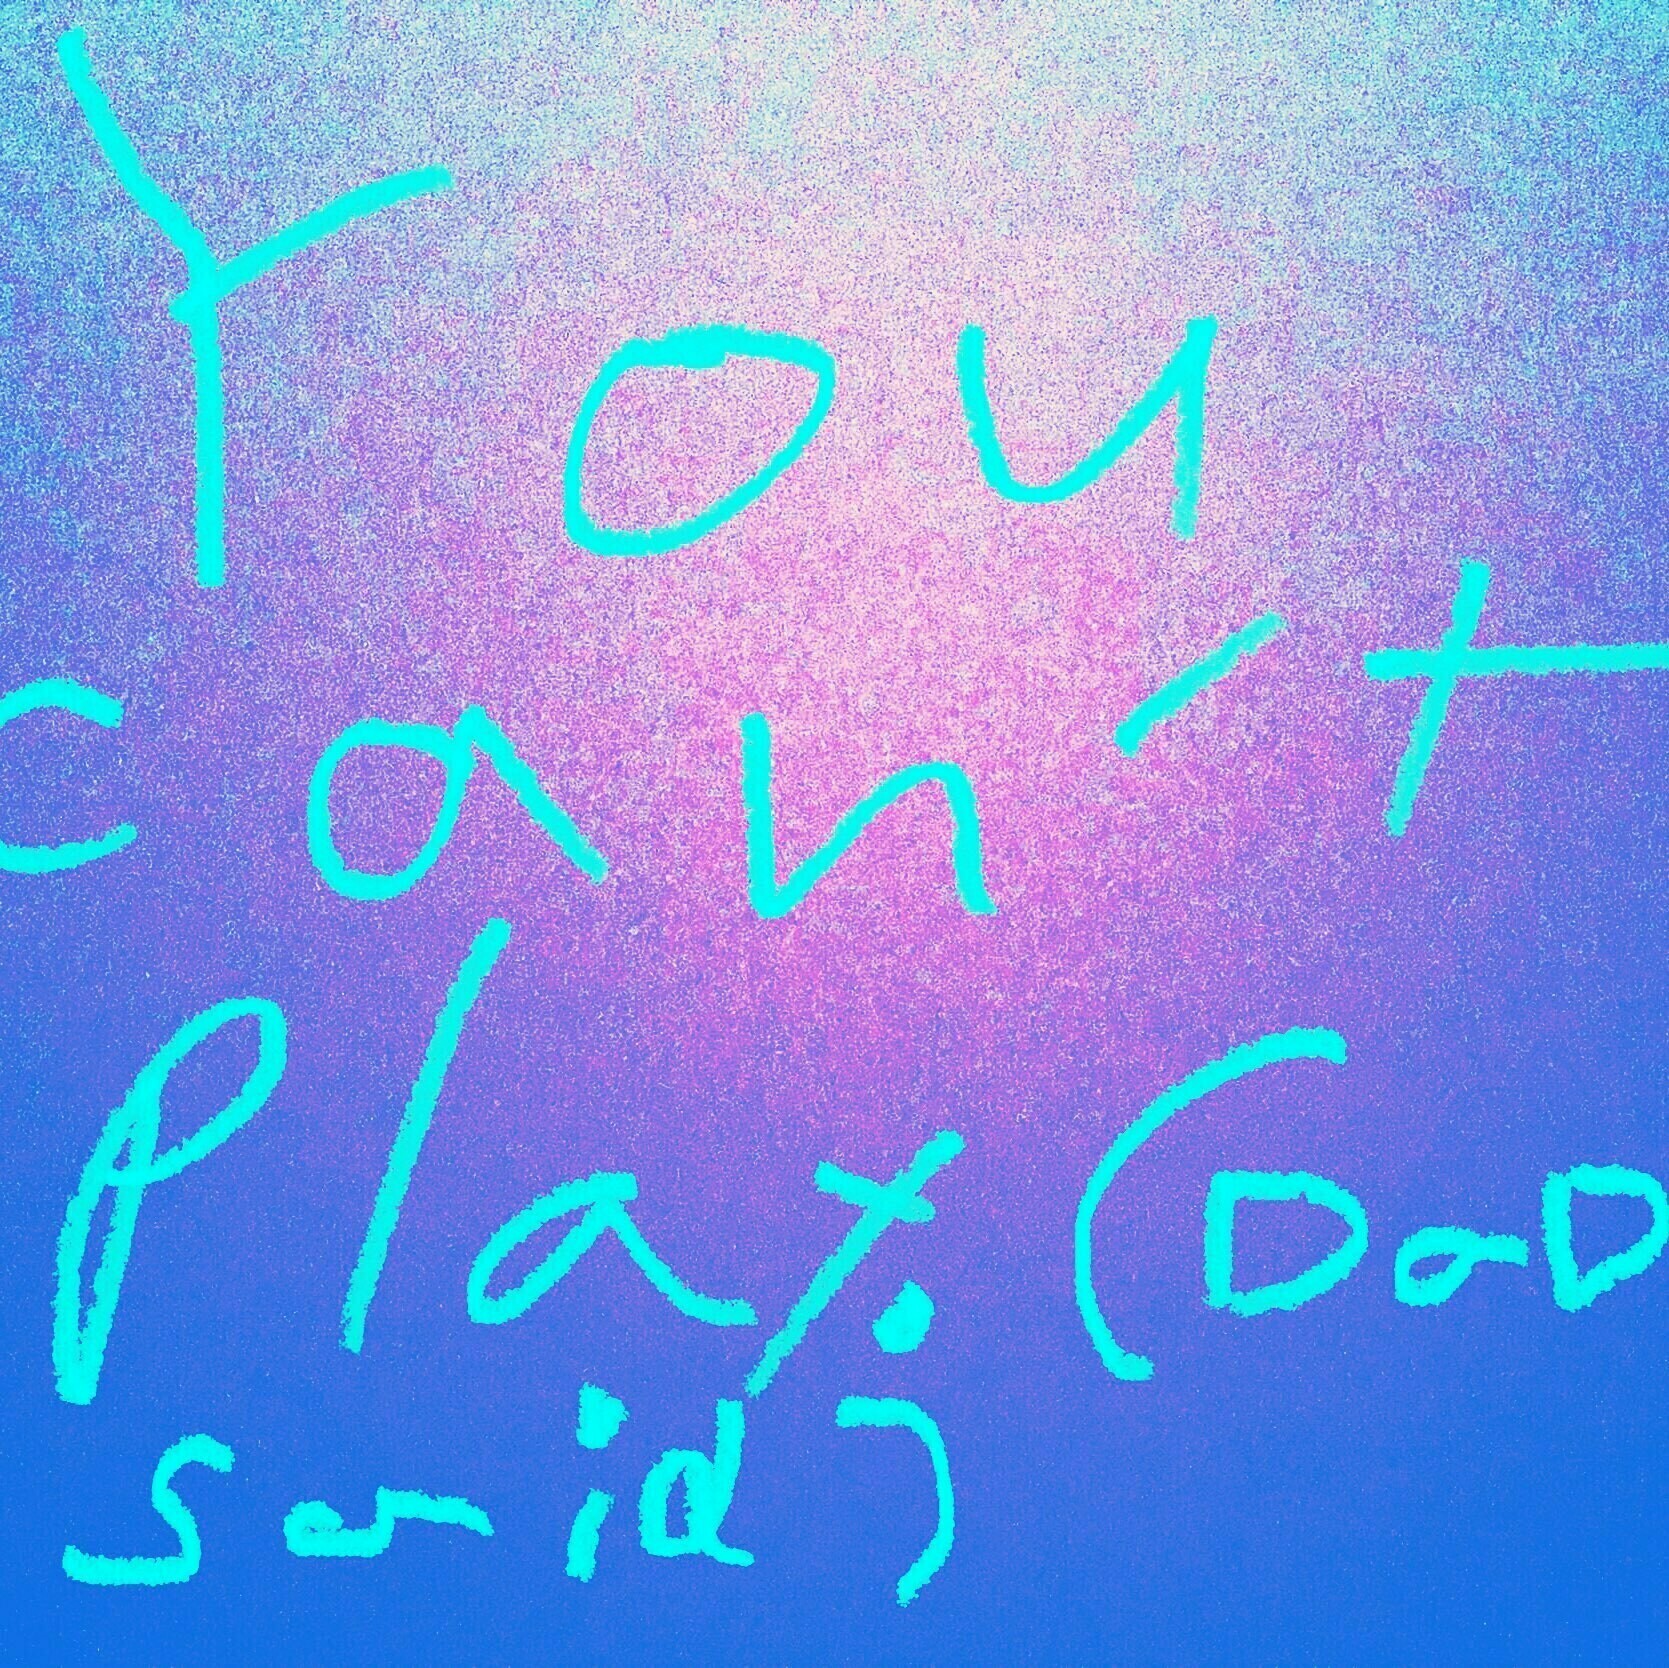 kid handwriting: "You can't play (Dad said)"